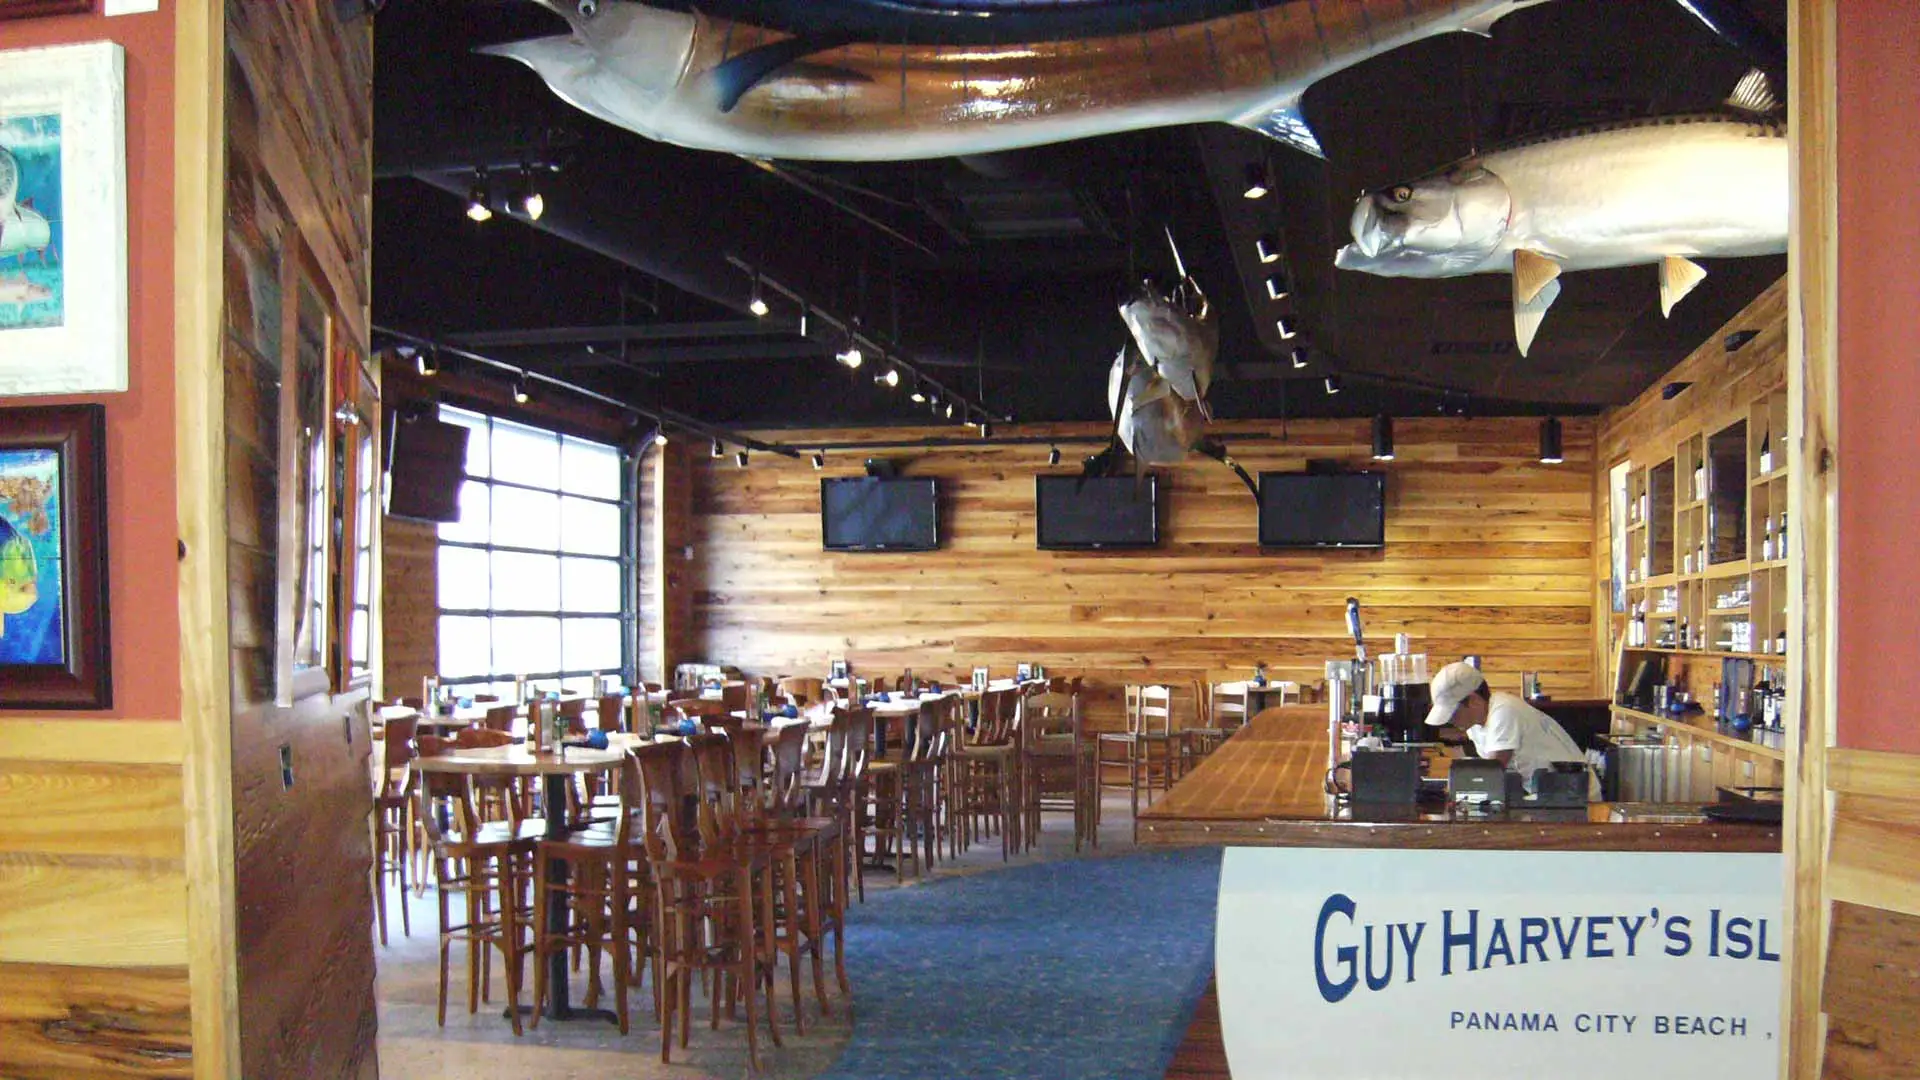 Custom dining area in an ocean fish themed restaurant.